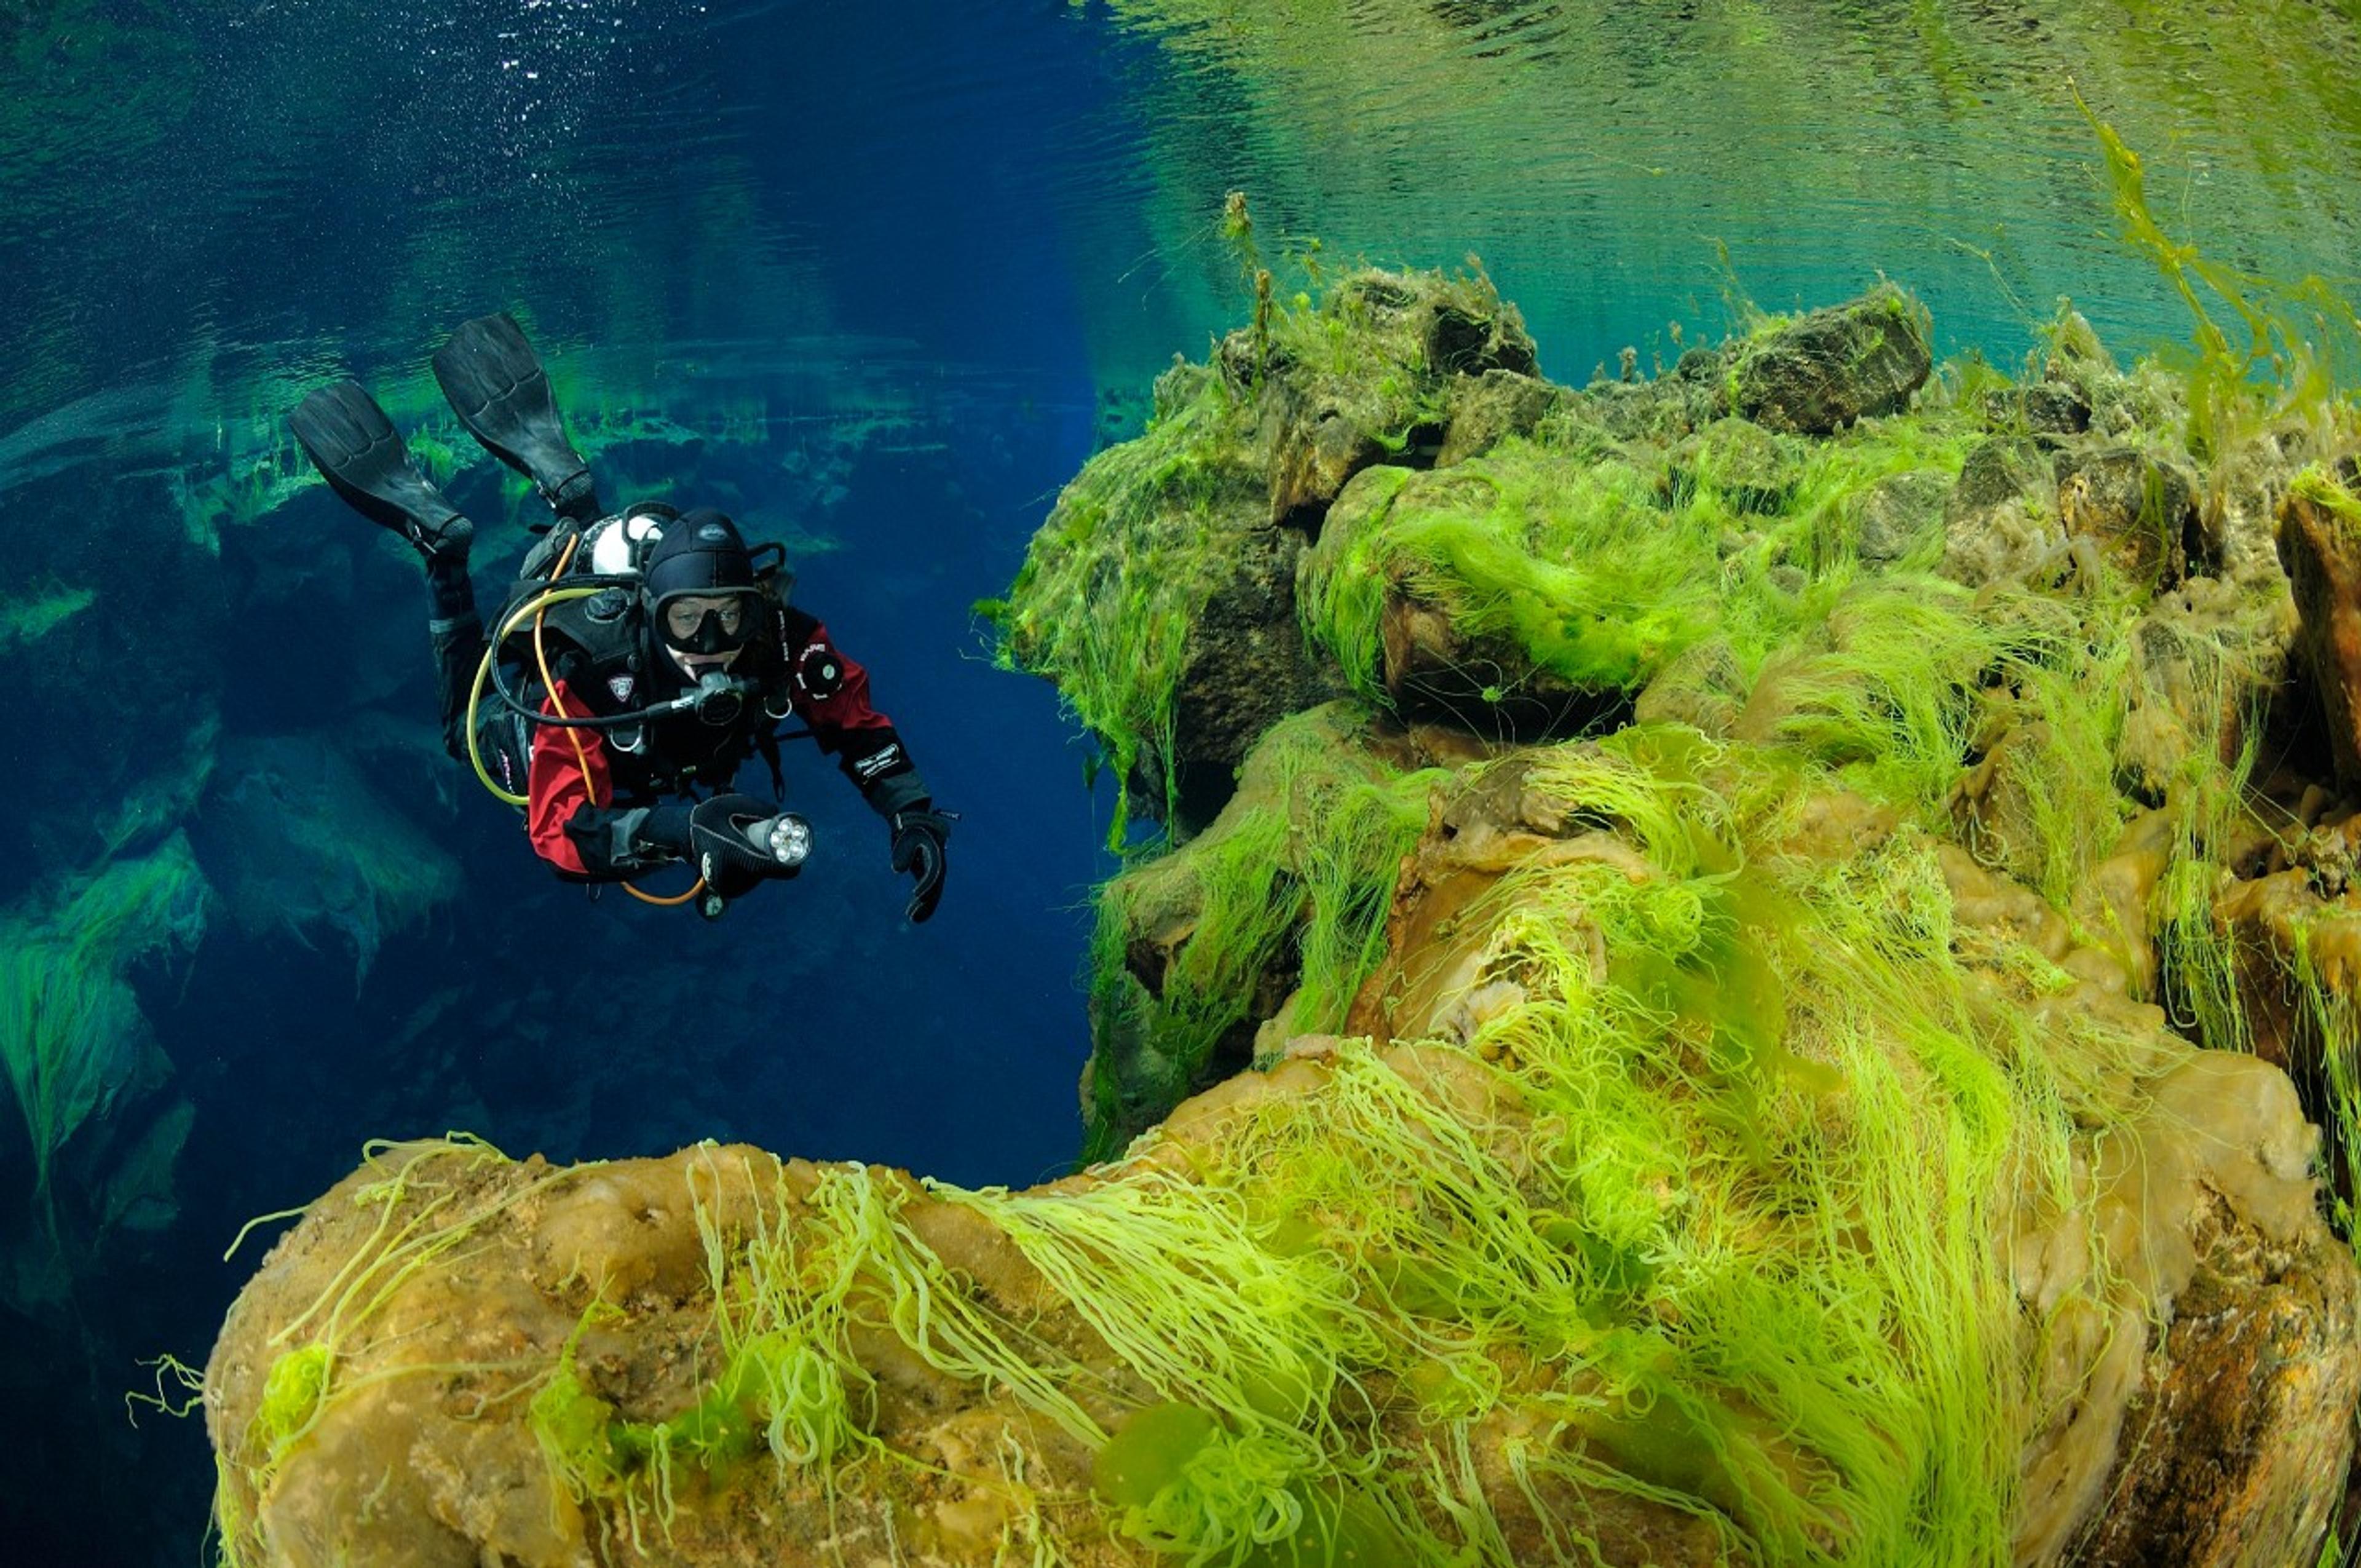 Scuba diver exploring the neon green algea fields in Silfra fissure